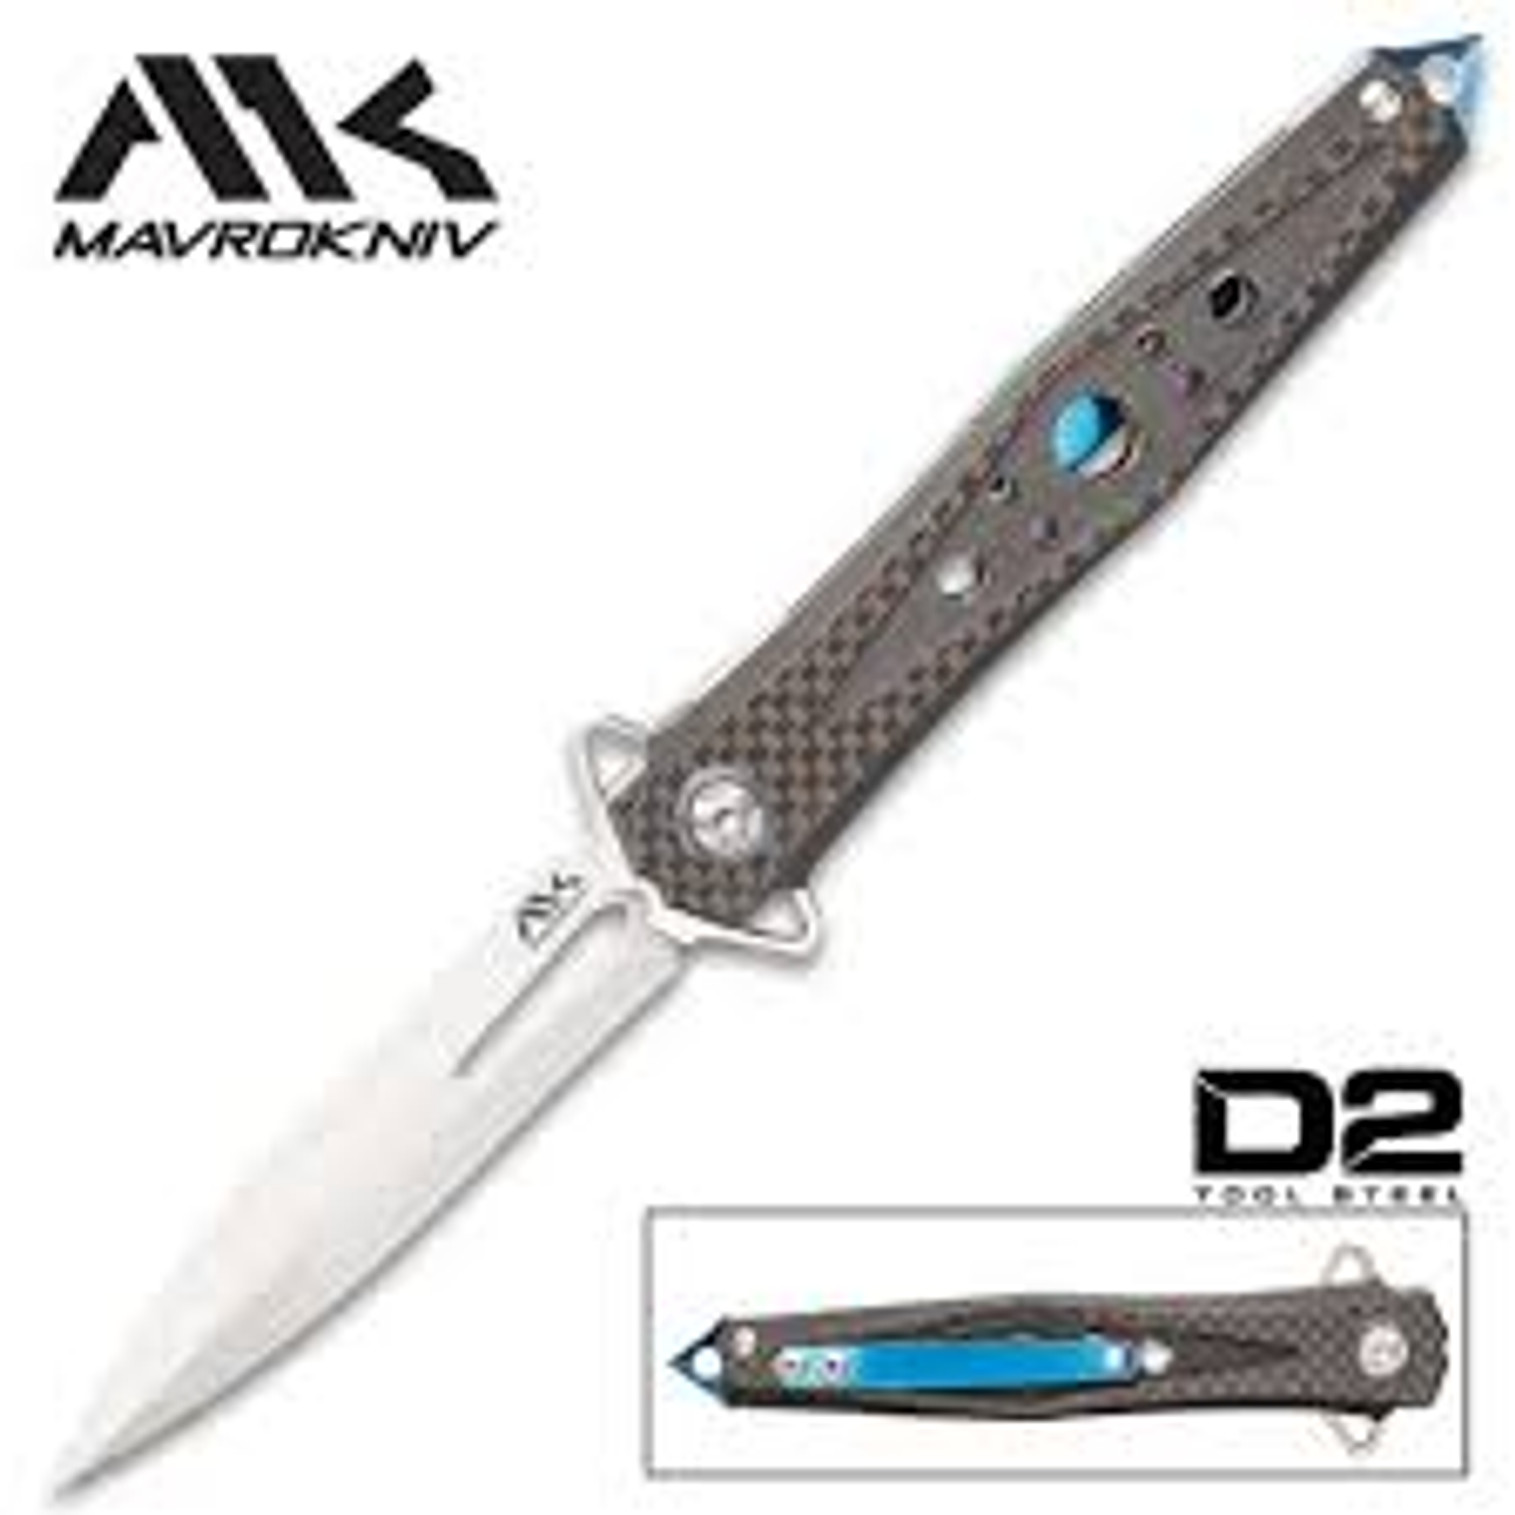 Mavrokniv Apex Pocket Knife - D2 Tool Steel Blade, Ball Bearing Opening, G10 And Carbon Steel Handle Scales, Pocket Clip - 5”